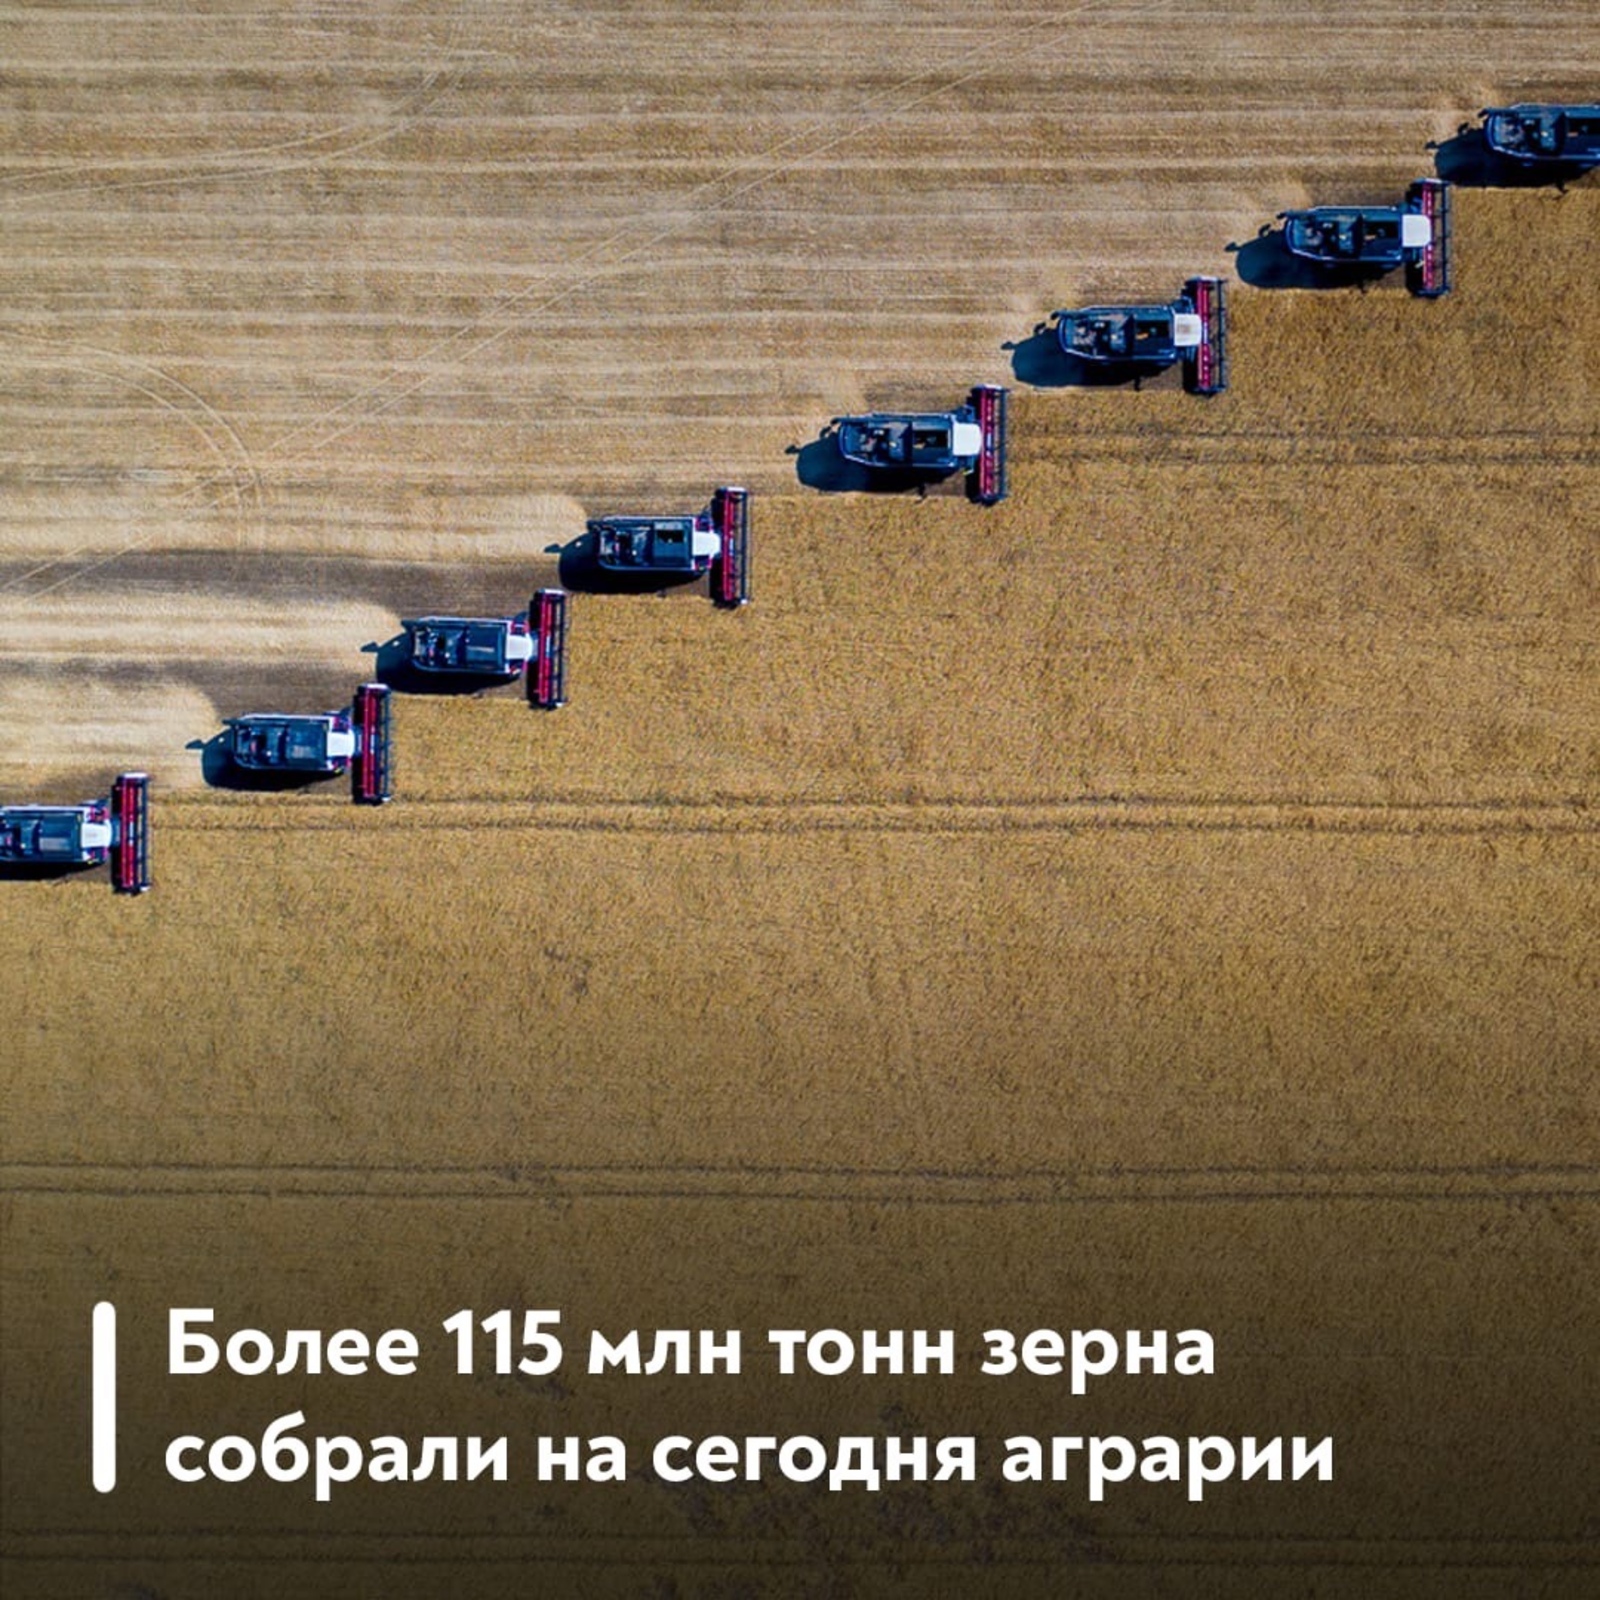 Аграрии России собрали более 115 млн тонн зерна